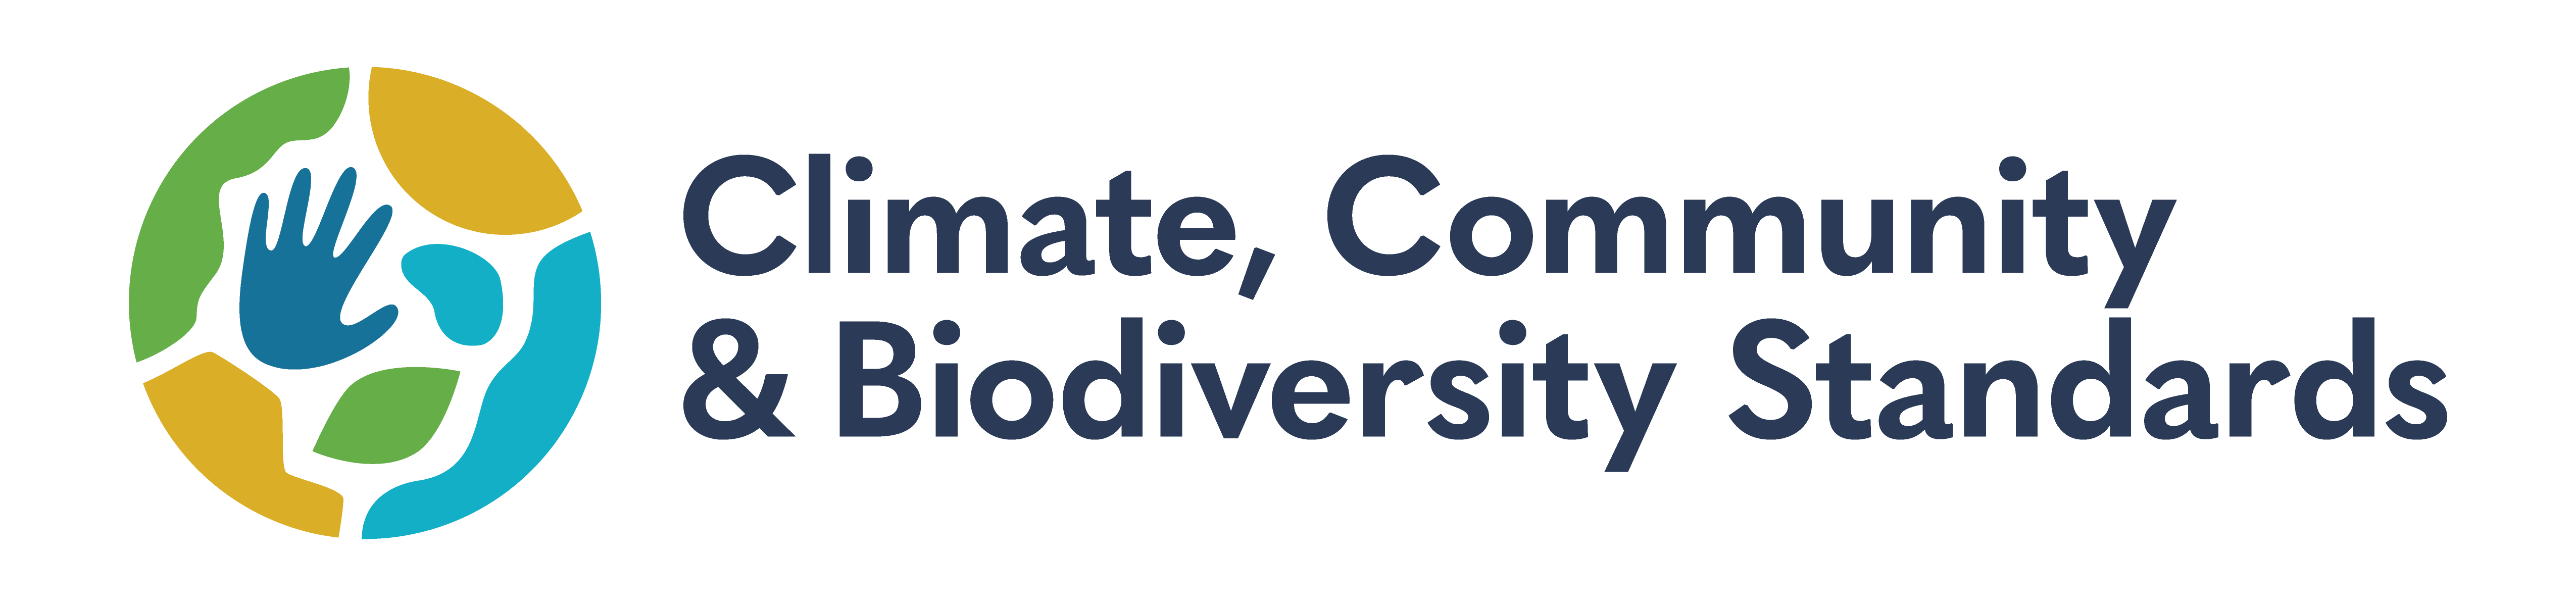 Climate Community Biodiversity logo